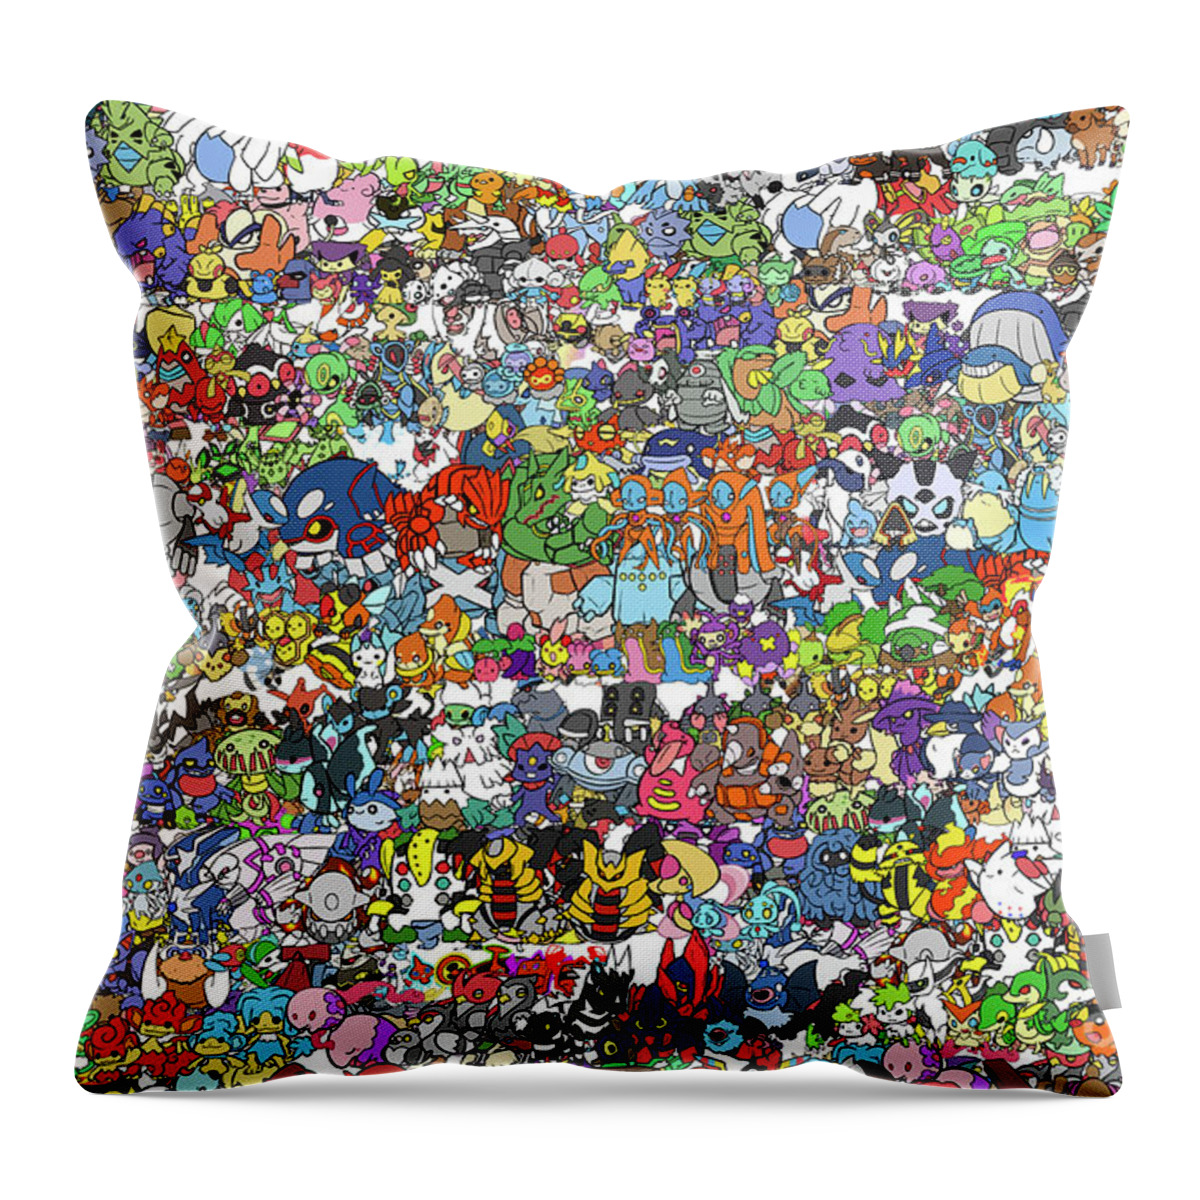  Throw Pillow featuring the digital art Pokemon by Mark Ashkenazi